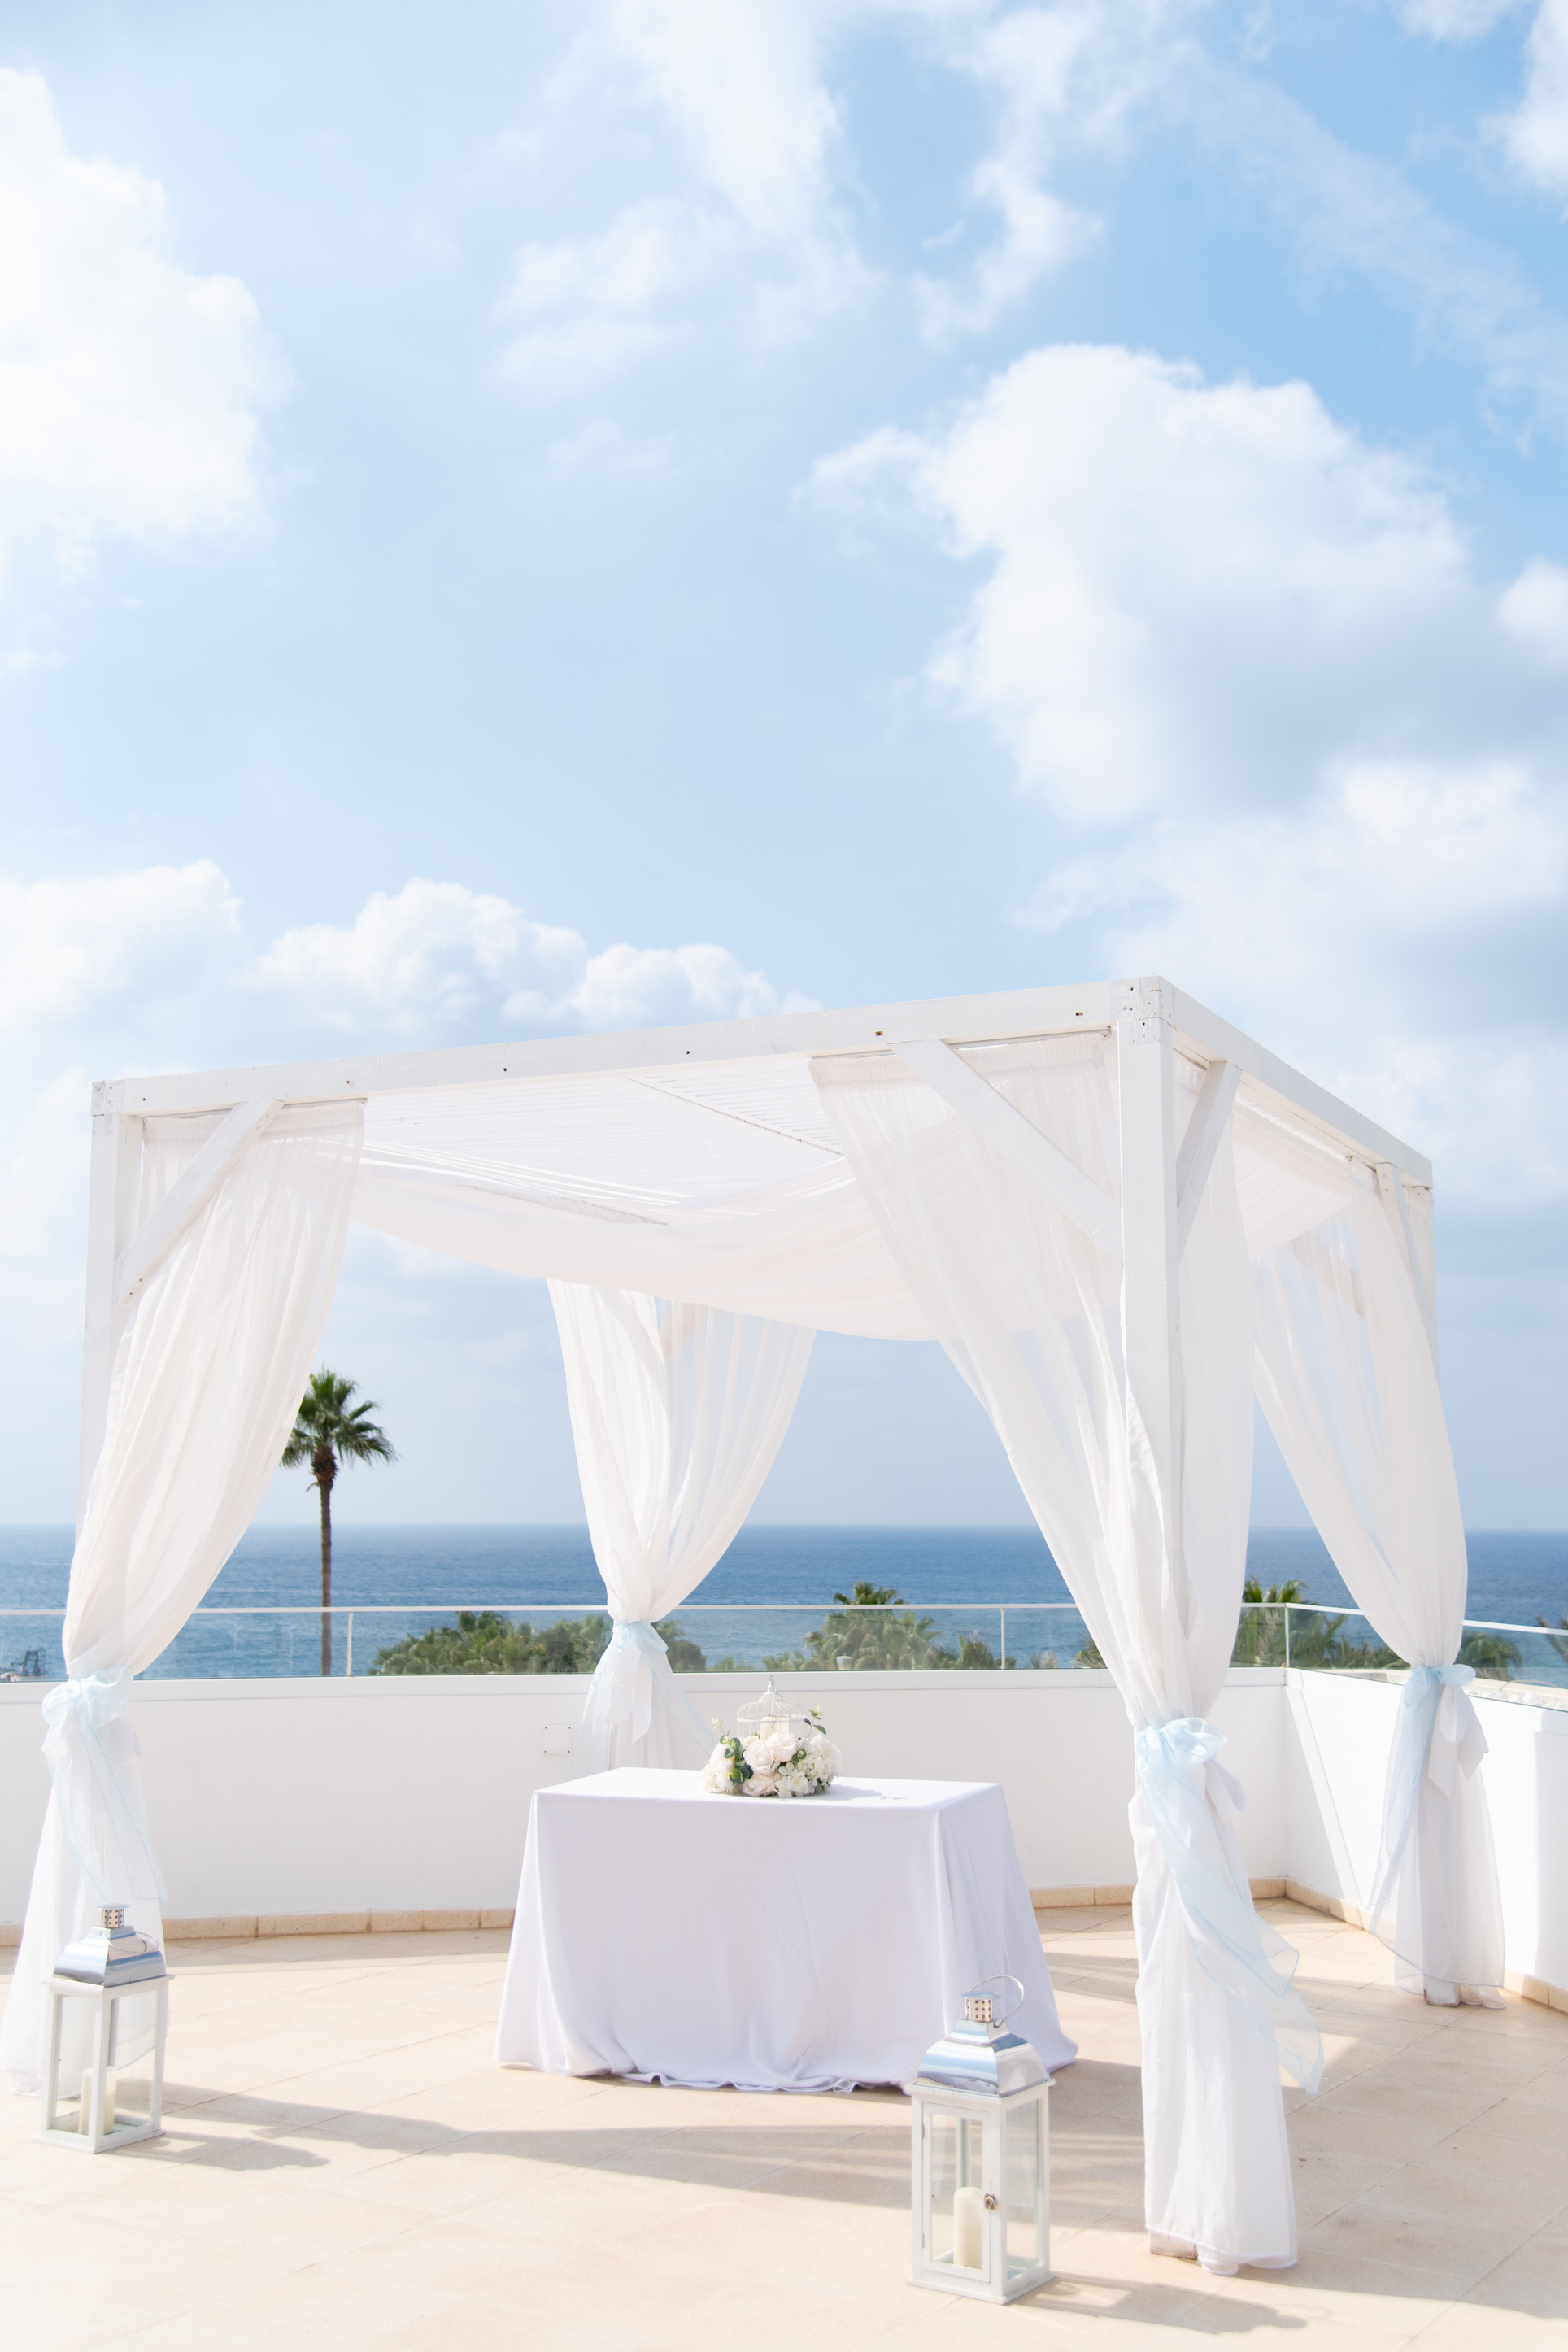 Book your wedding day in Laura Beach & Splash Resort